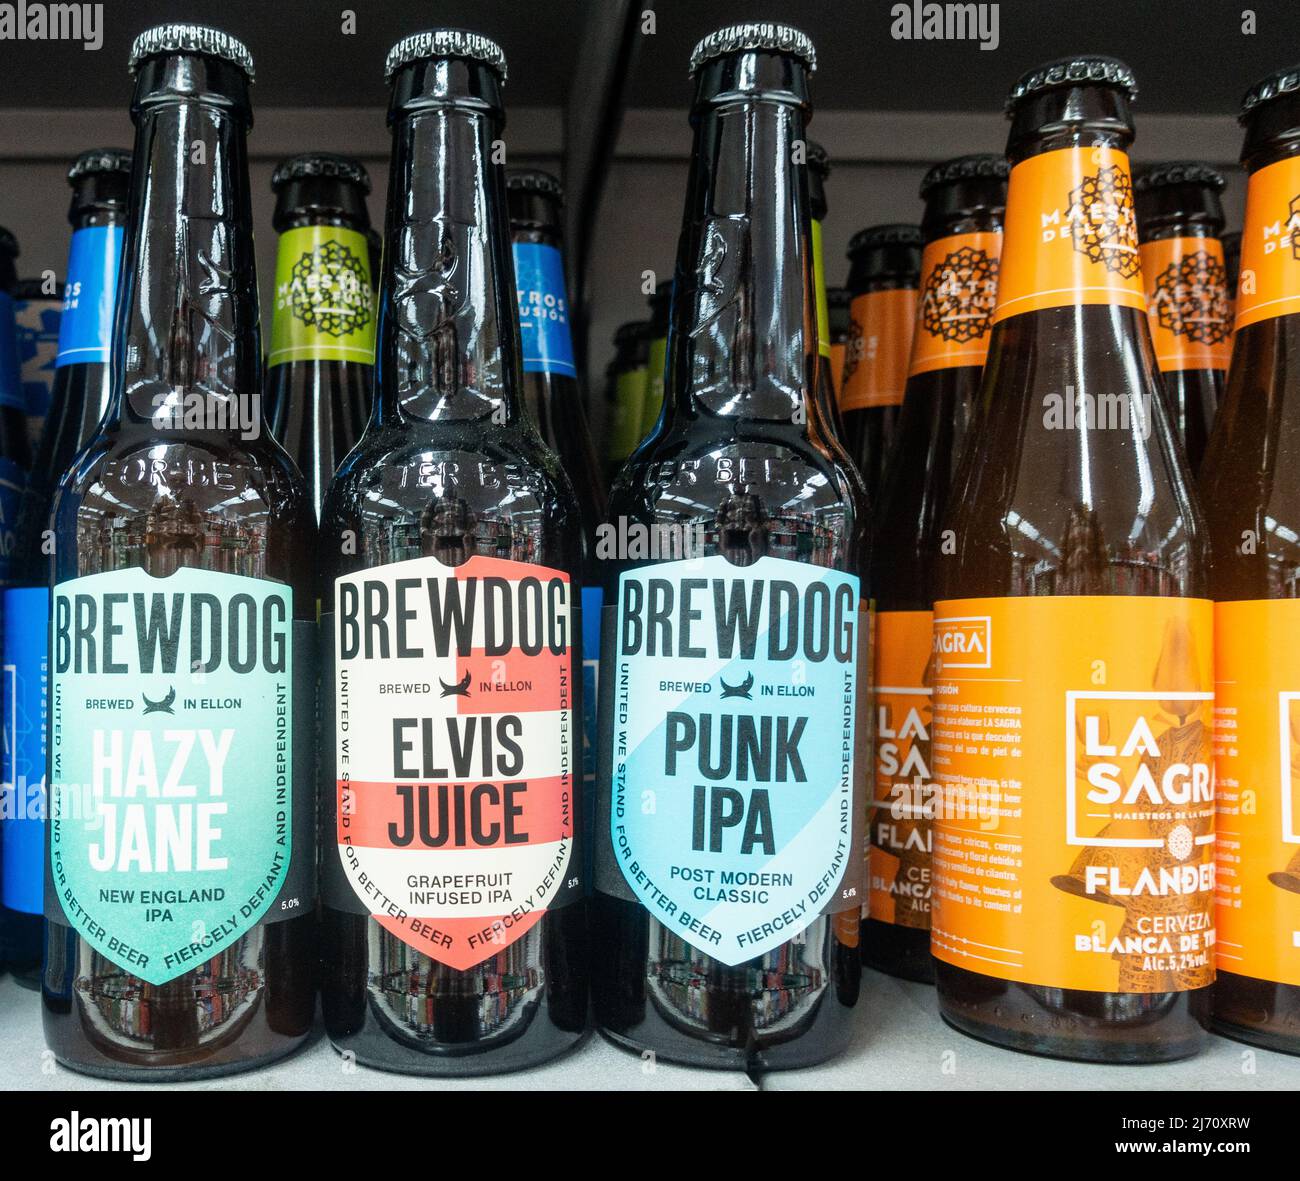 Bottles of Brewdog beer ( Hazy Jane, Elvis Juice, Punk IPA ) in Spanish supermarket Stock Photo